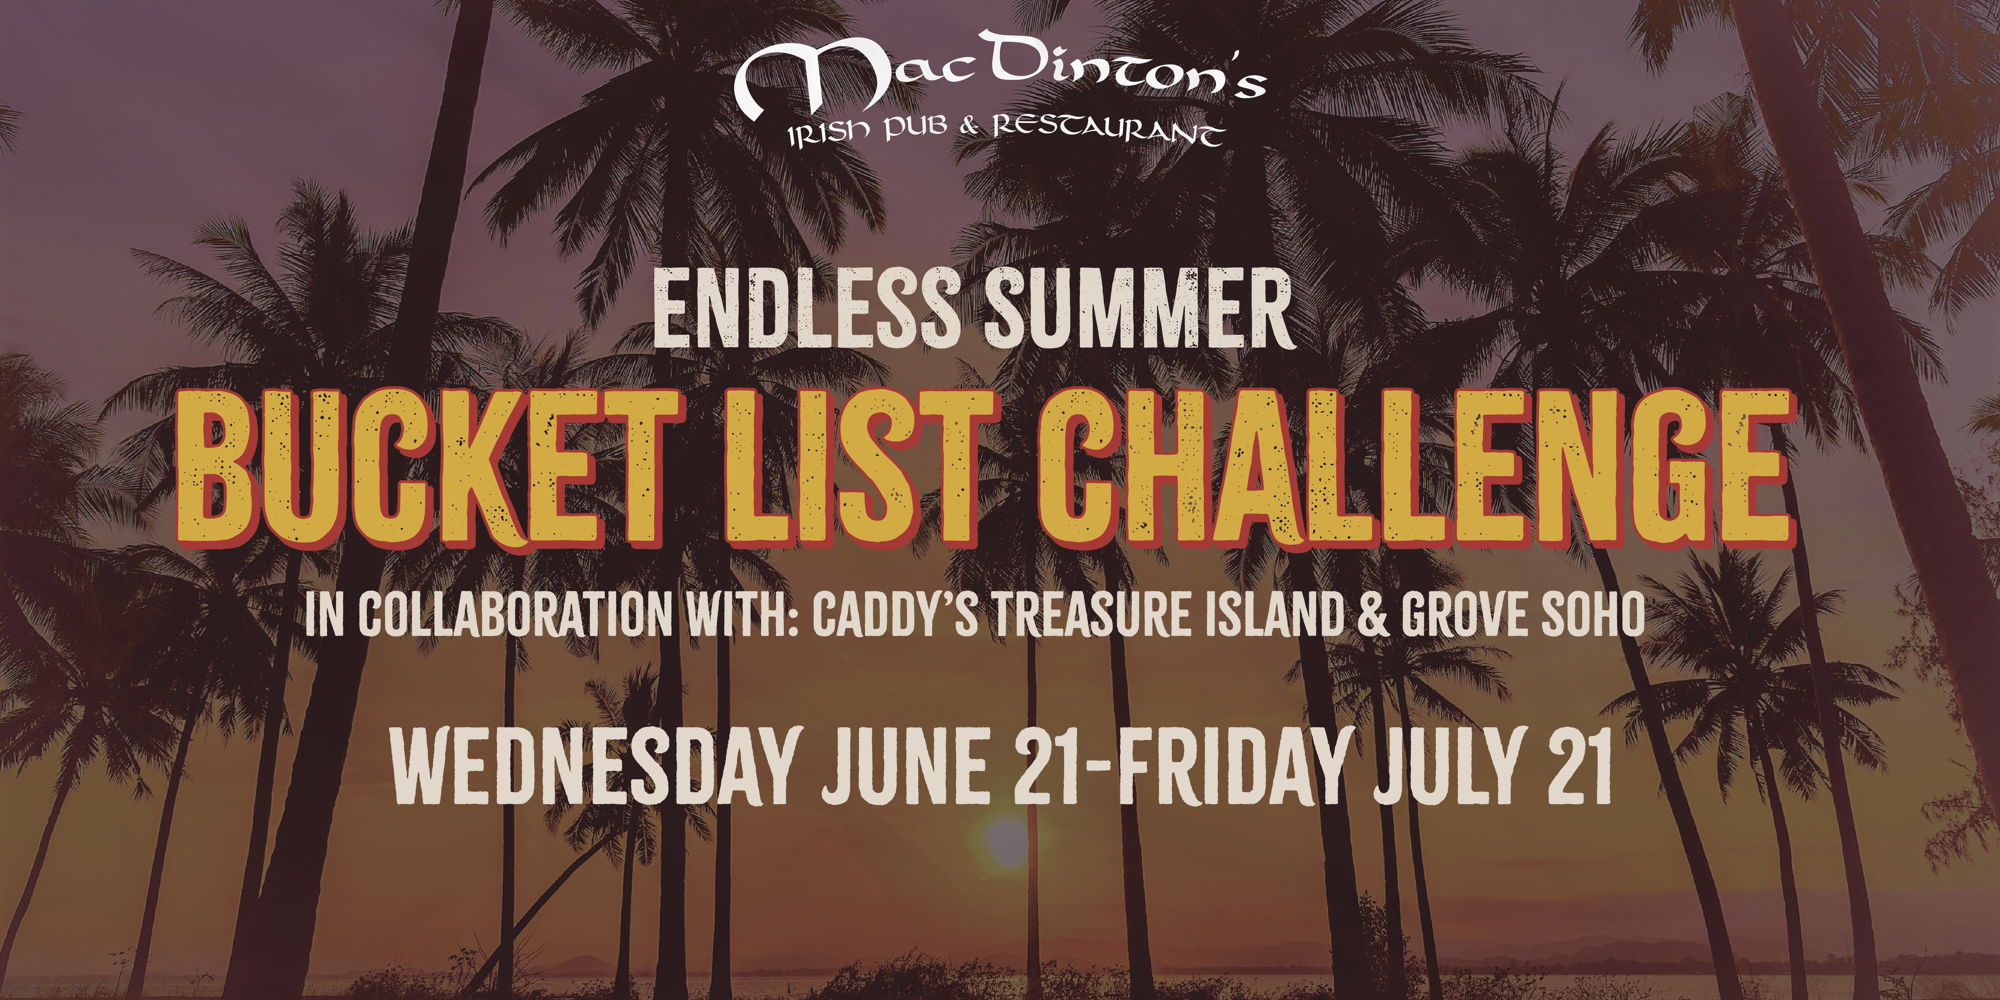 Endless Summer Bucket List Challenge promotional image